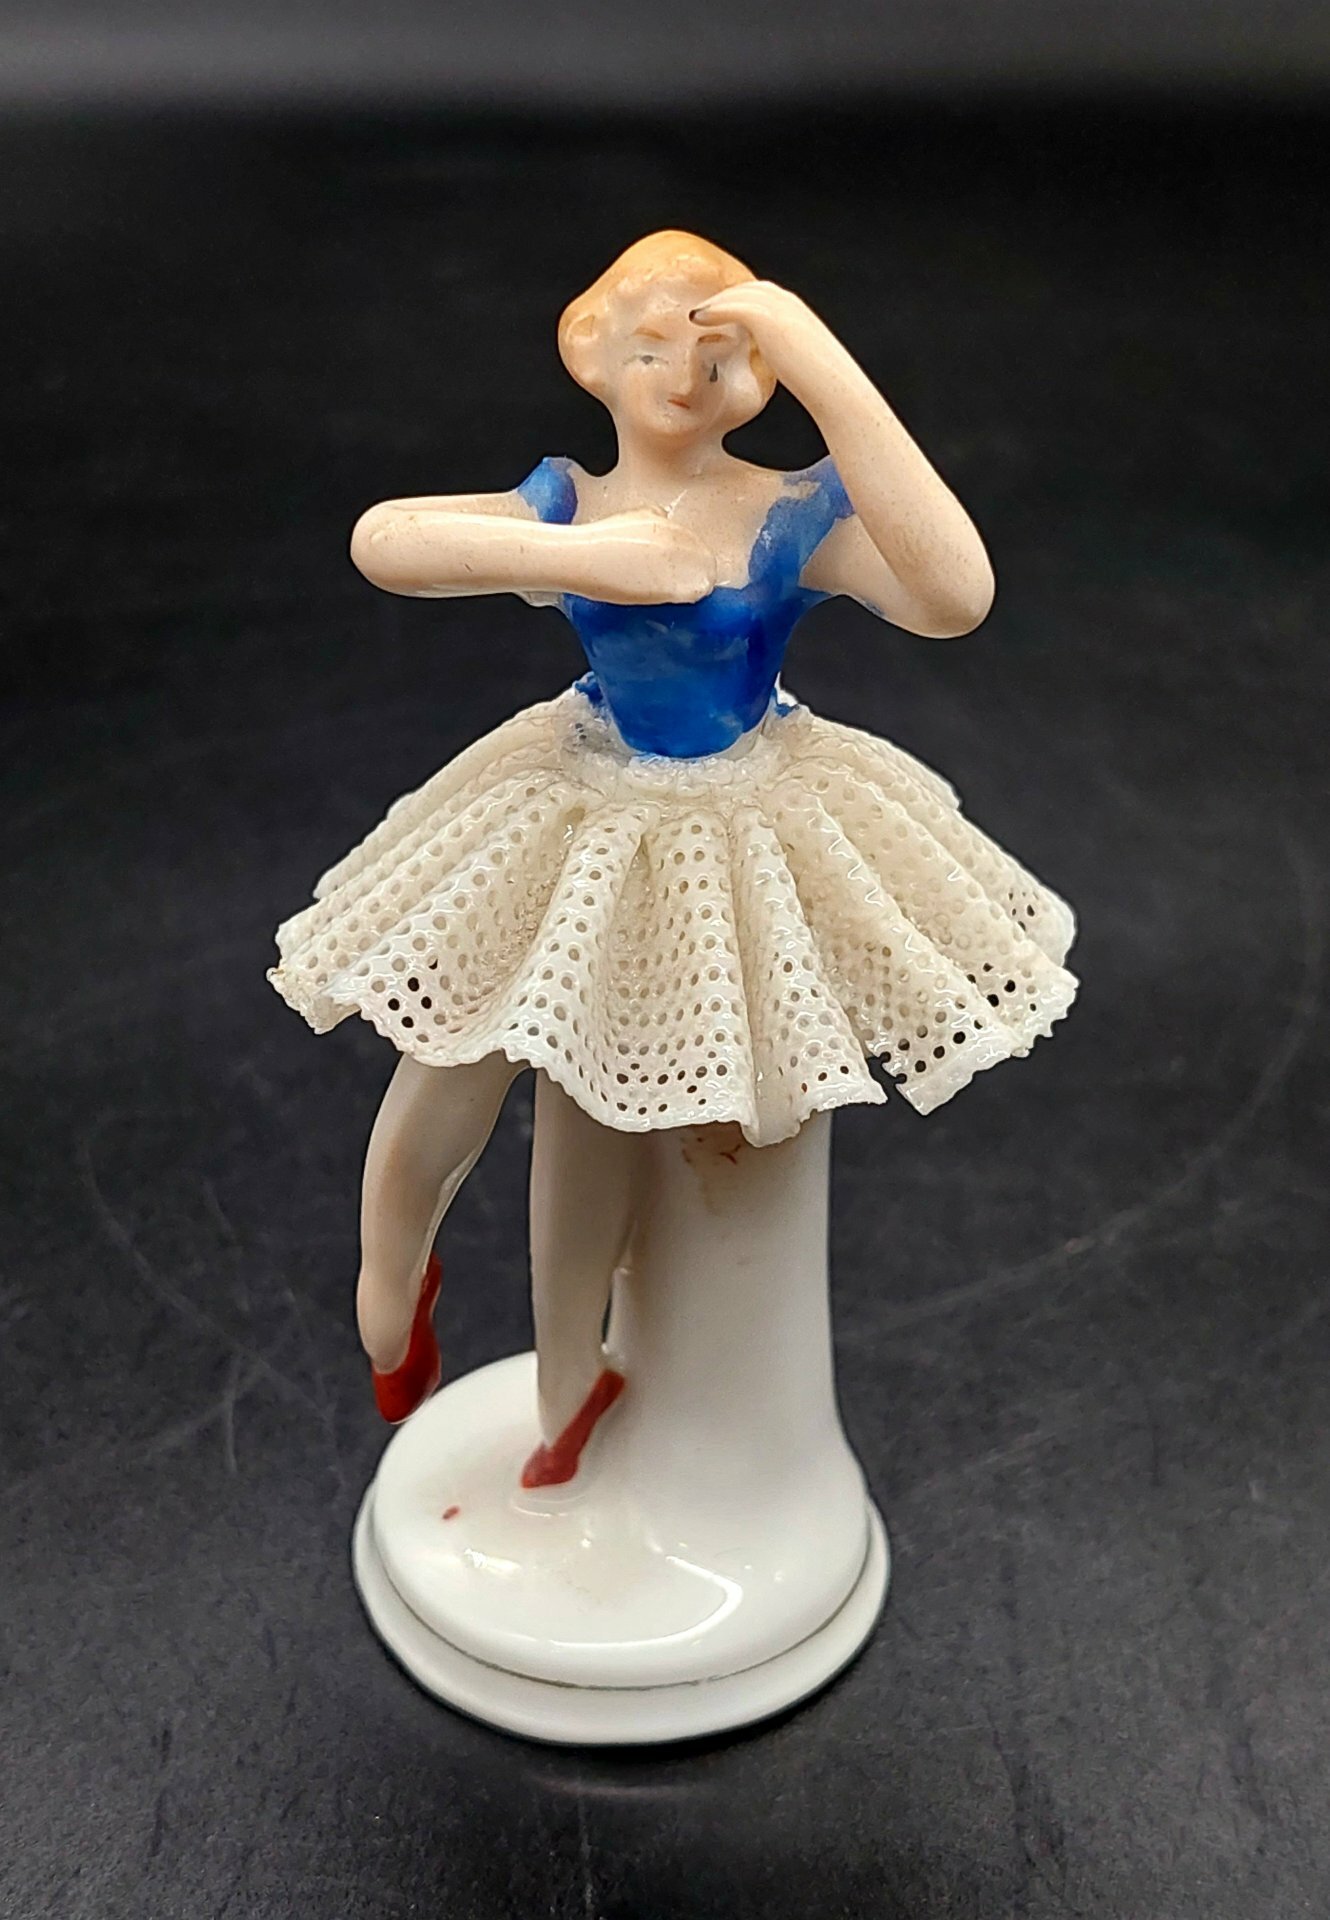 Статуэтка (миниатюра) "Балерина на тумбе", фарфор, кружевной фарфор, роспись